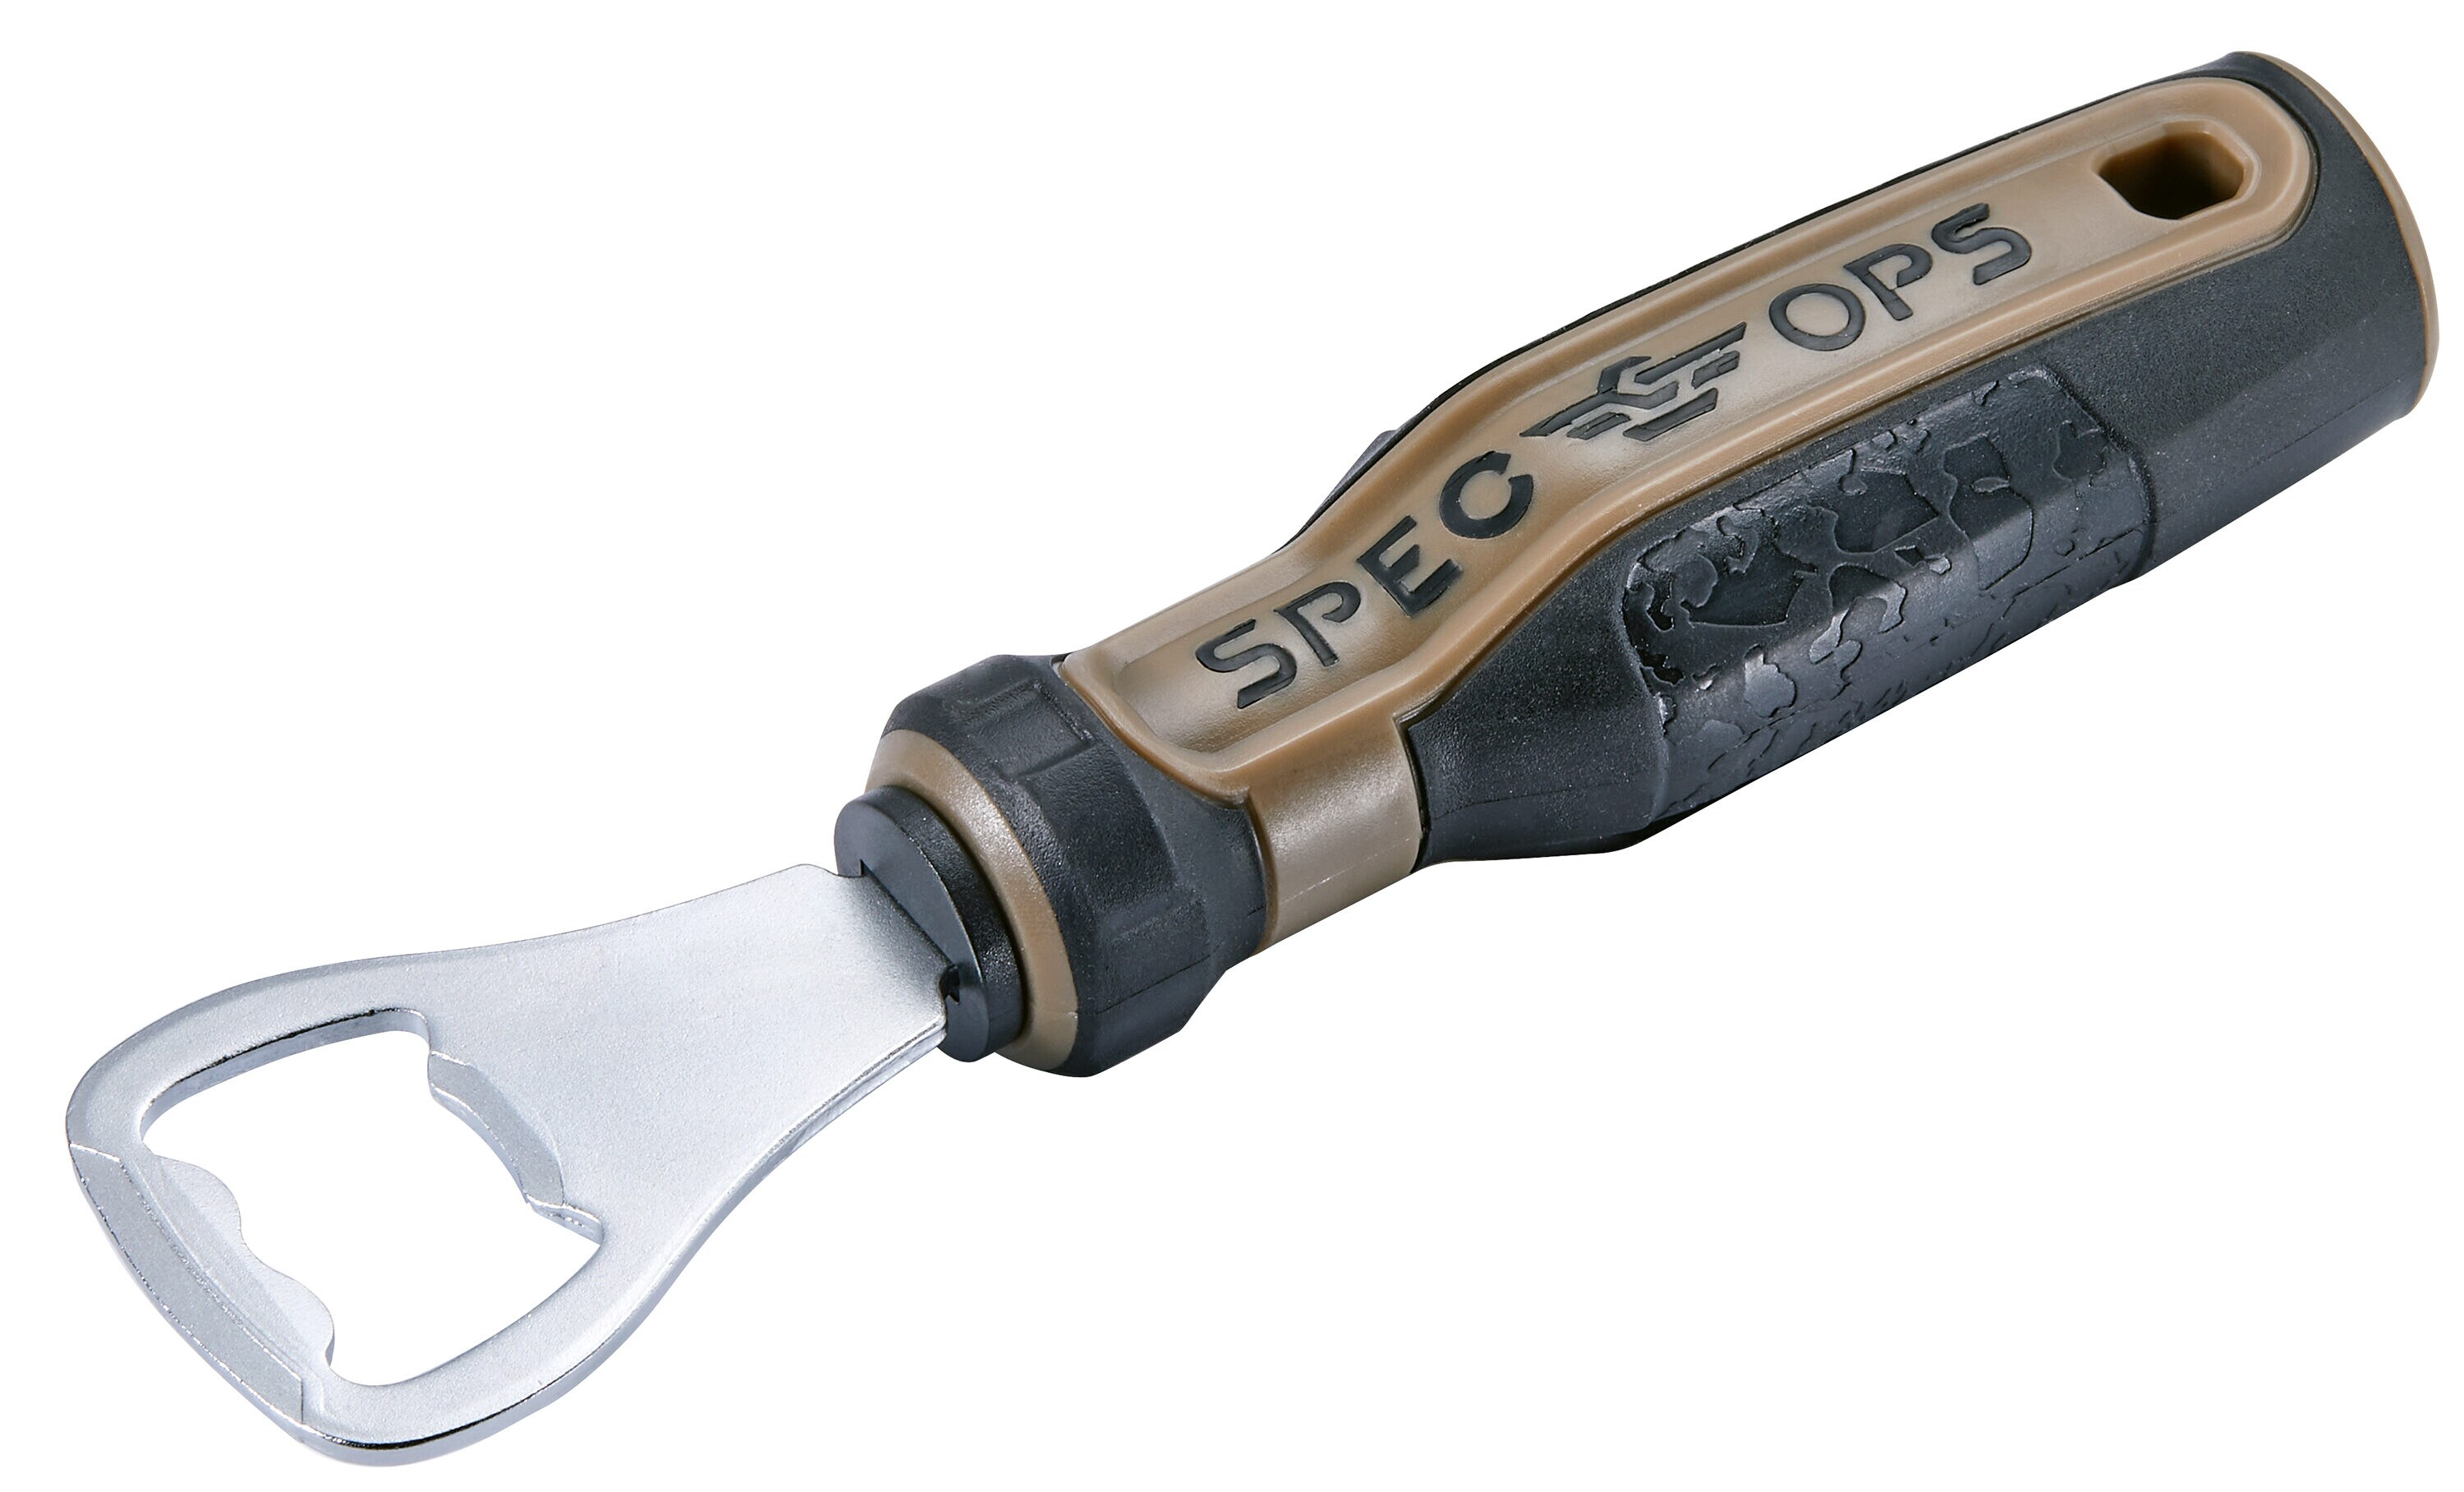 Spec Ops Tools Black/Tan Manual Handheld Bottle Opener in the